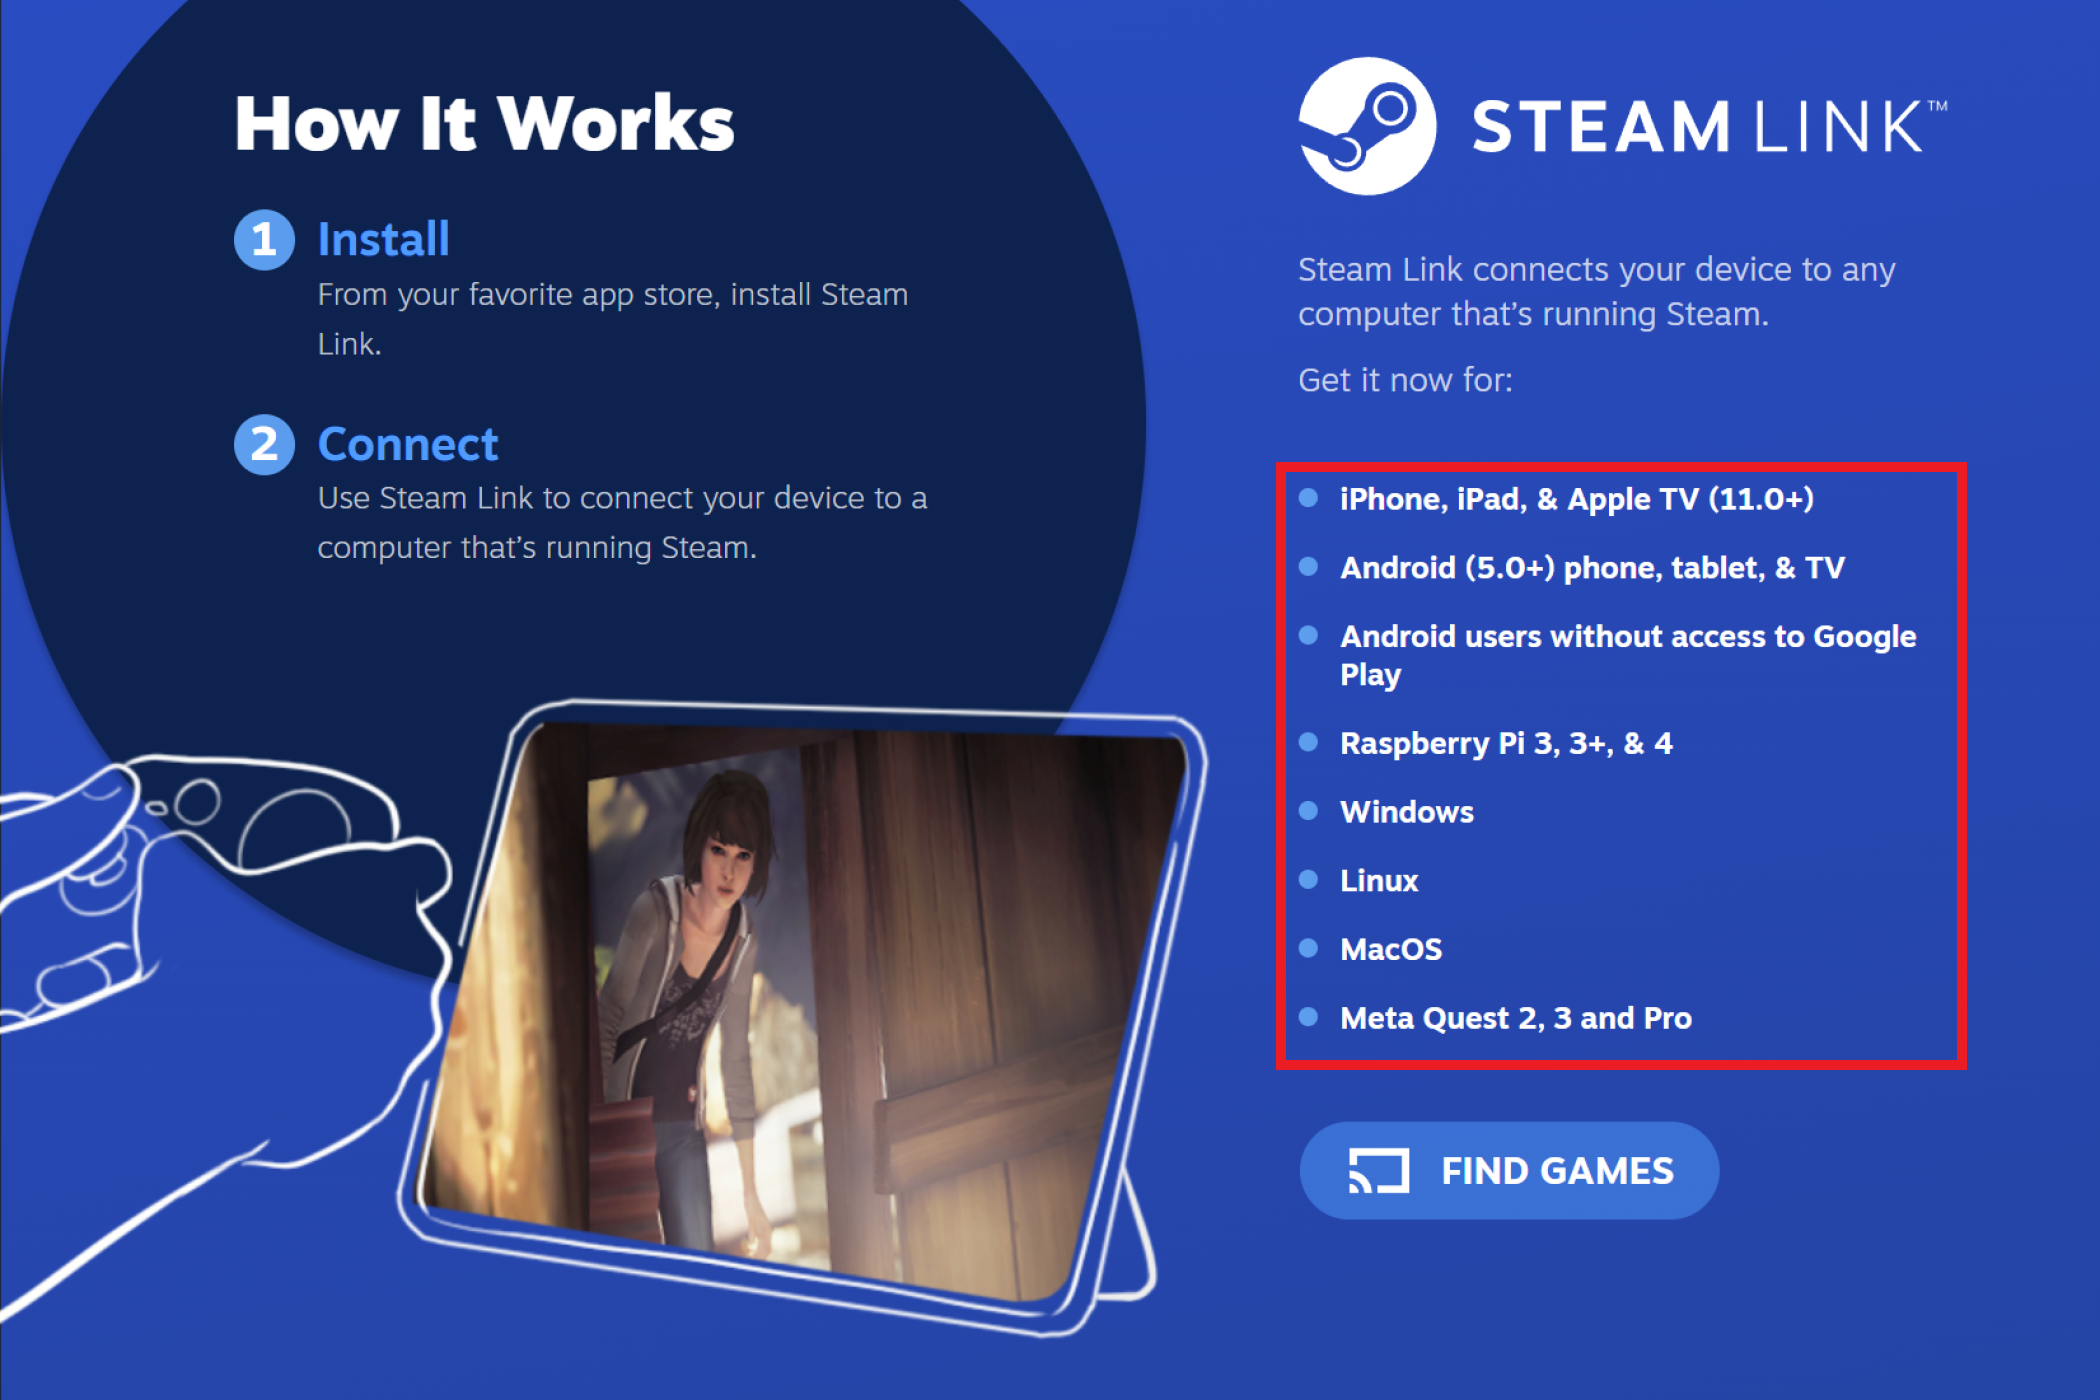 Steam Link download page. 